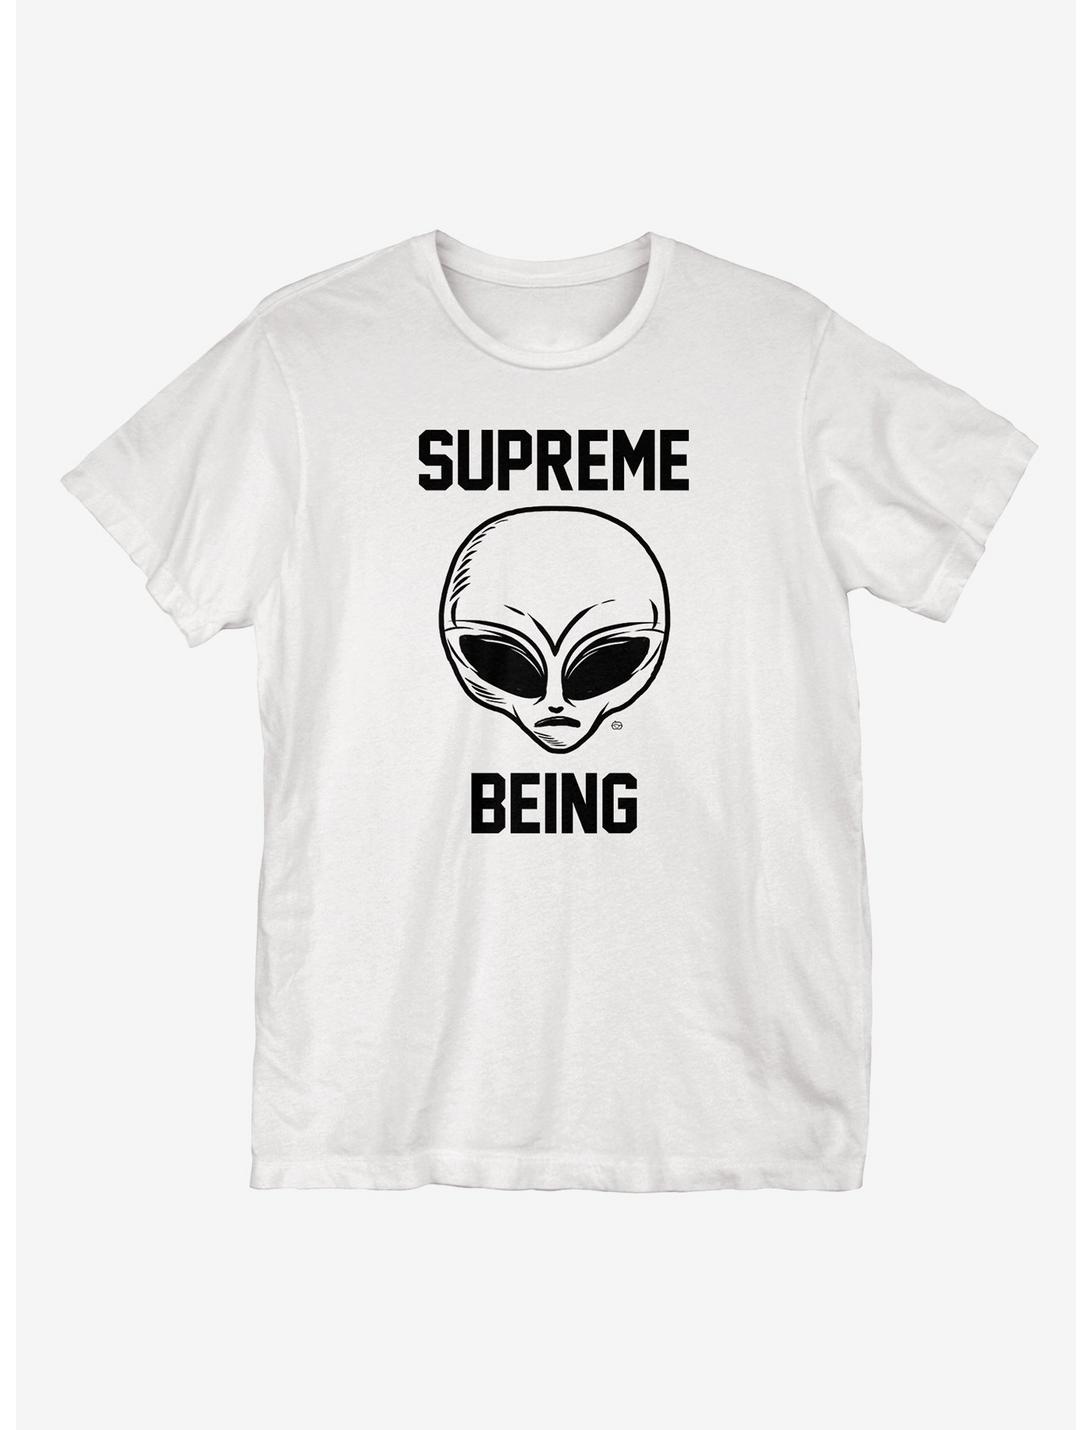 Supreme Being T-Shirt, WHITE, hi-res